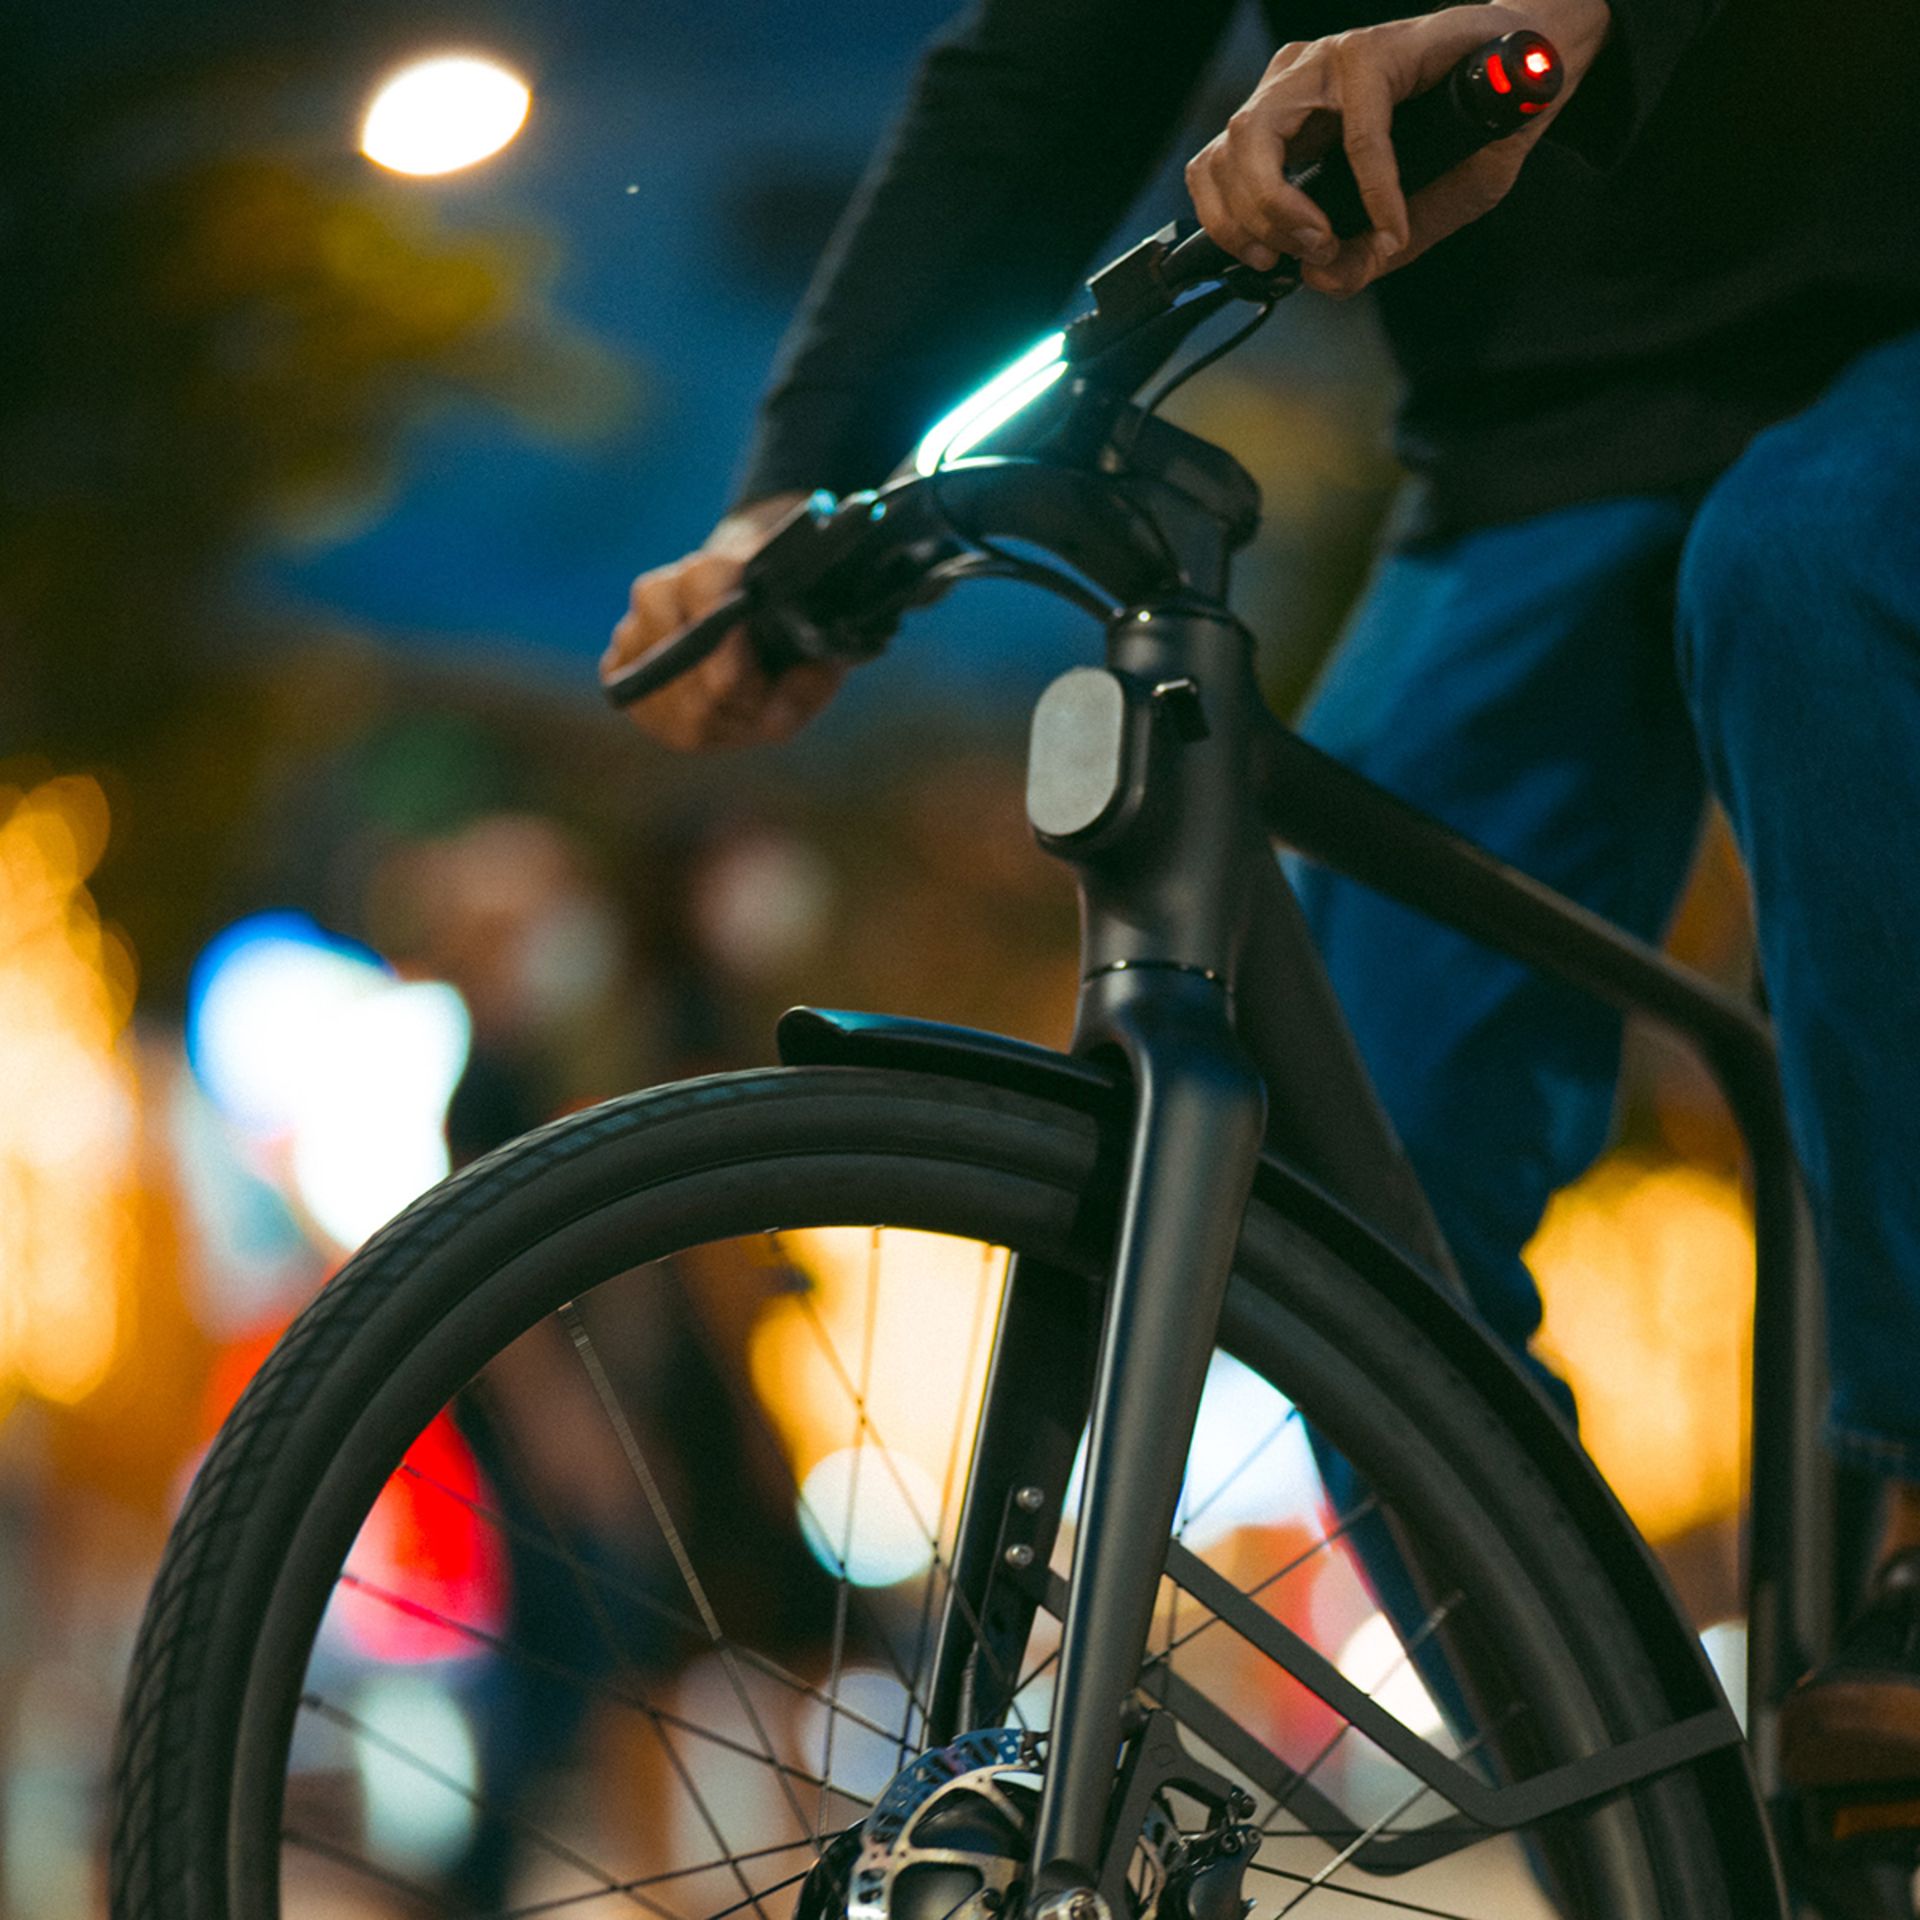 Modmo Saigon+ Electric Bicycle - RRP £2800 - Size L (Rider 175-190cm) - Image 15 of 17